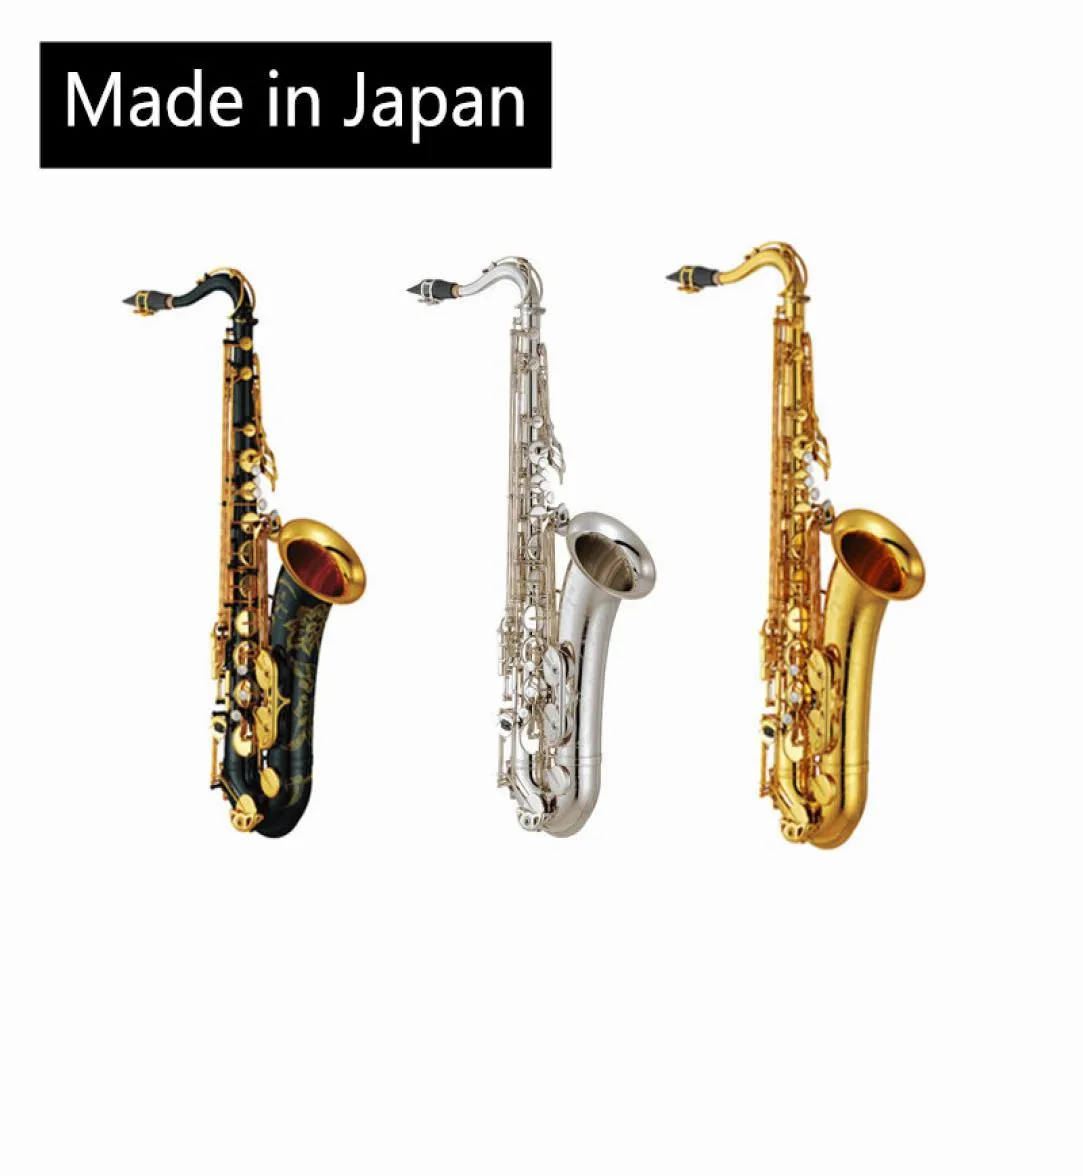 Hergestellt in Japan 875 Tenor Flat B Saxophon Gold Lack Saxophon Tenor Fall FALL E SAX Silber Keys Tenor Saxphone Paket Mail4949211